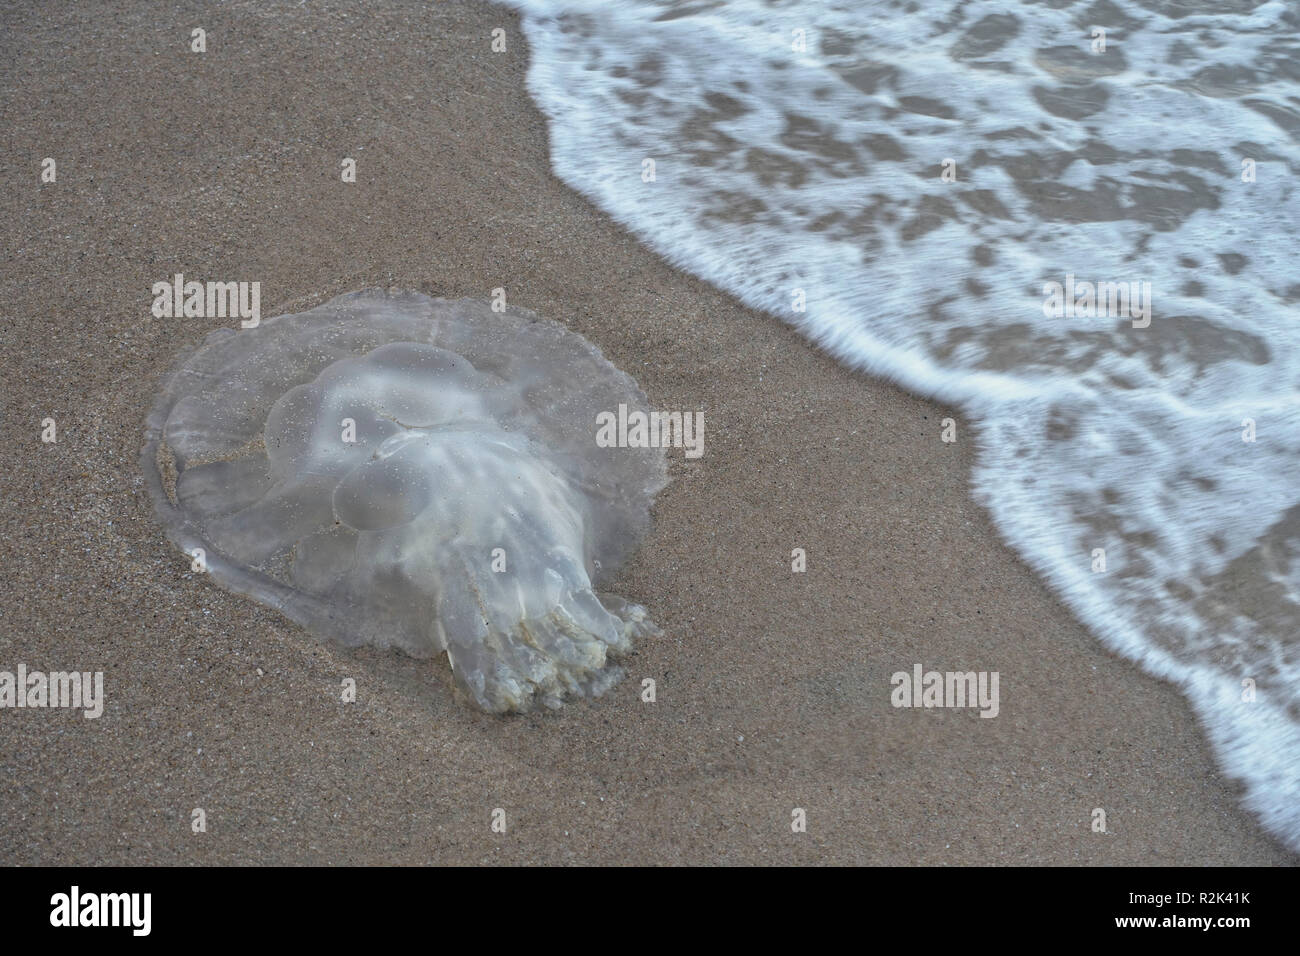 Jellyfish on sandy beach Stock Photo